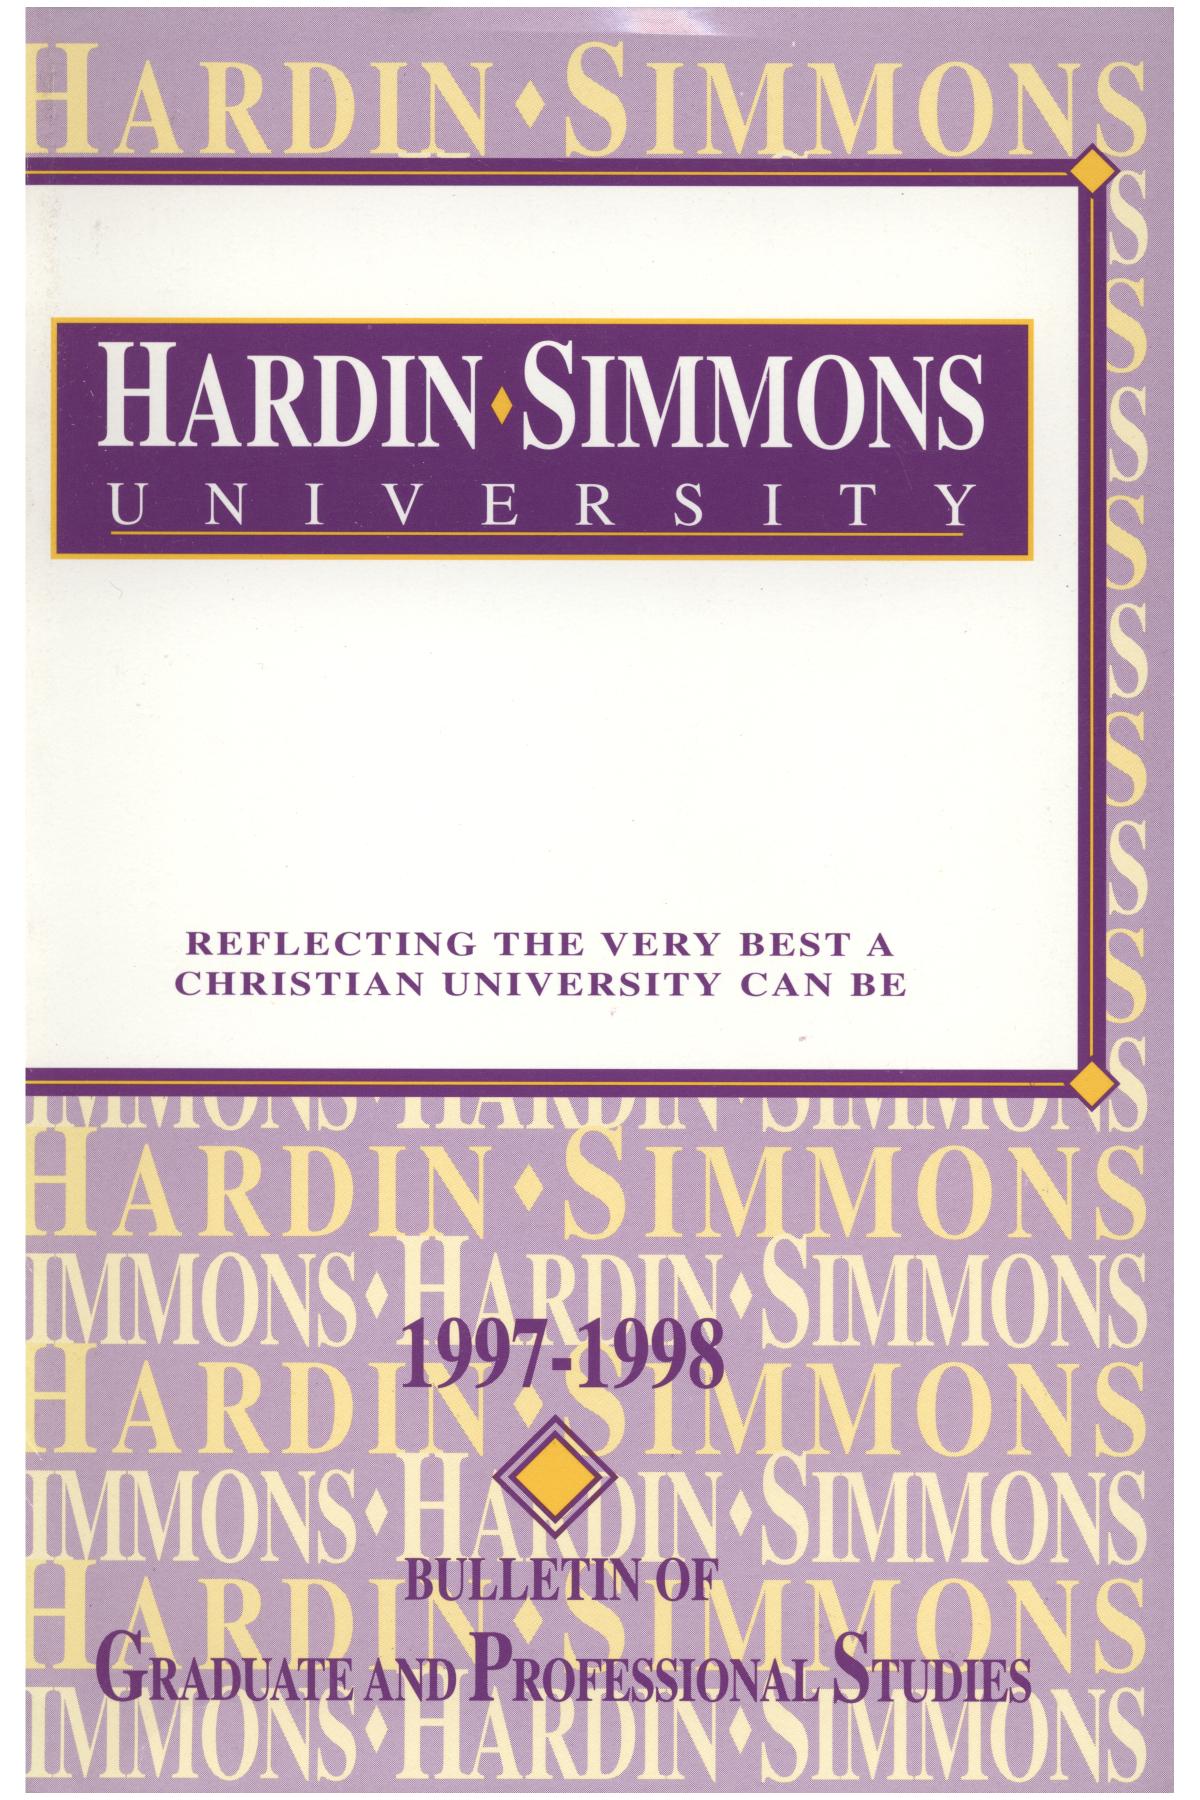 Catalog of Hardin-Simmons University, 1997-1998 Graduate Bulletin
                                                
                                                    Front Cover
                                                